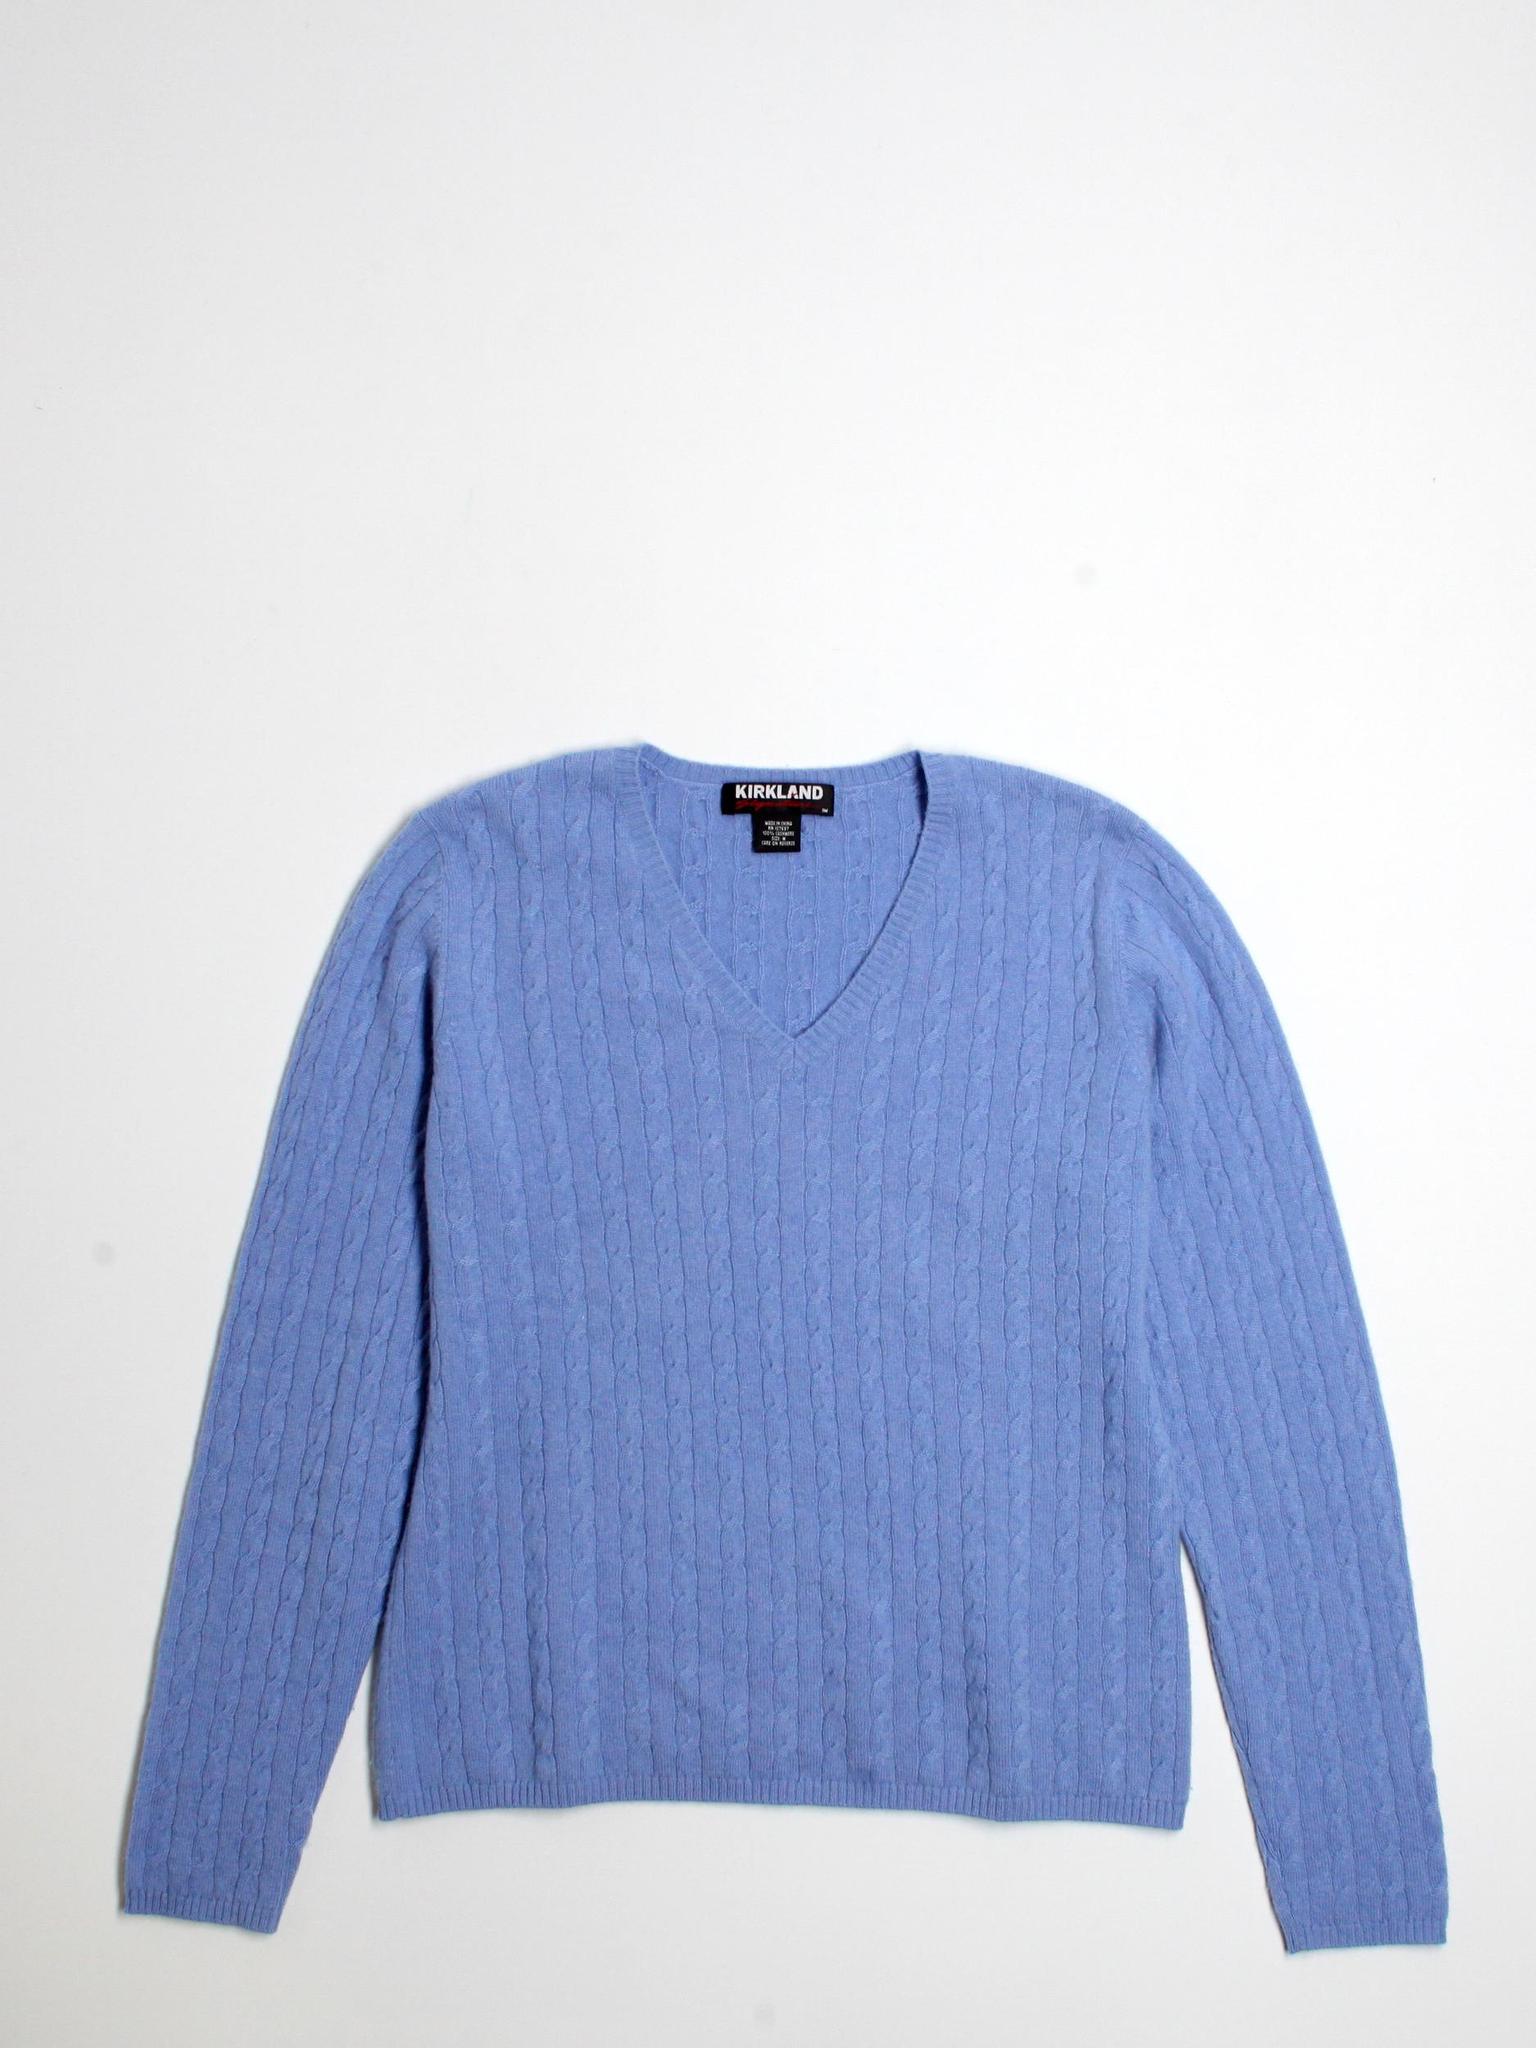 KIRKLAND Signature 100% Cashmere Cashmere Sweater Size M - 72% off ...